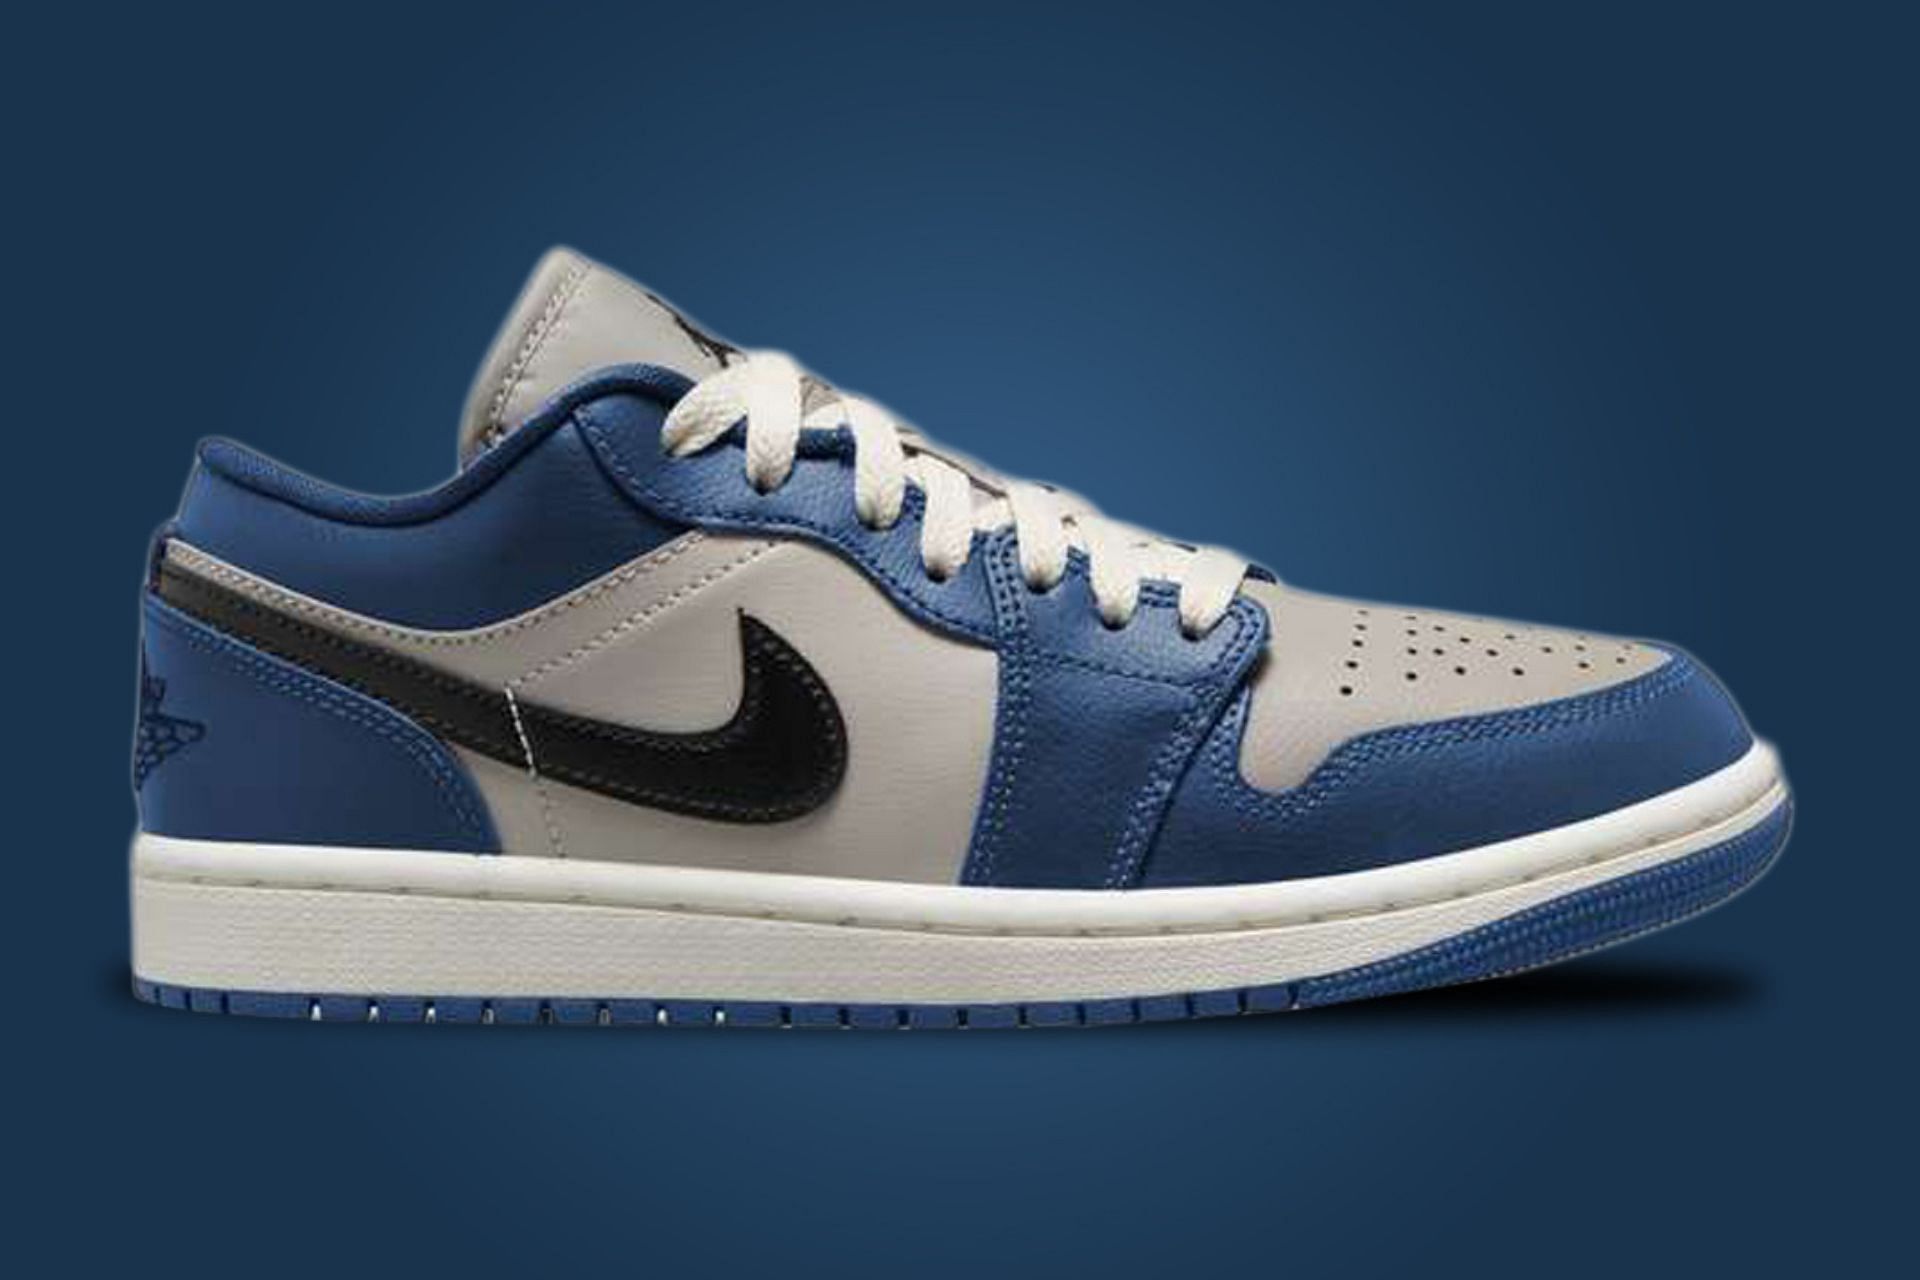 Nike Air Jordan 1 Low Blue Grey" sneakers: Where to buy, price, and more explored